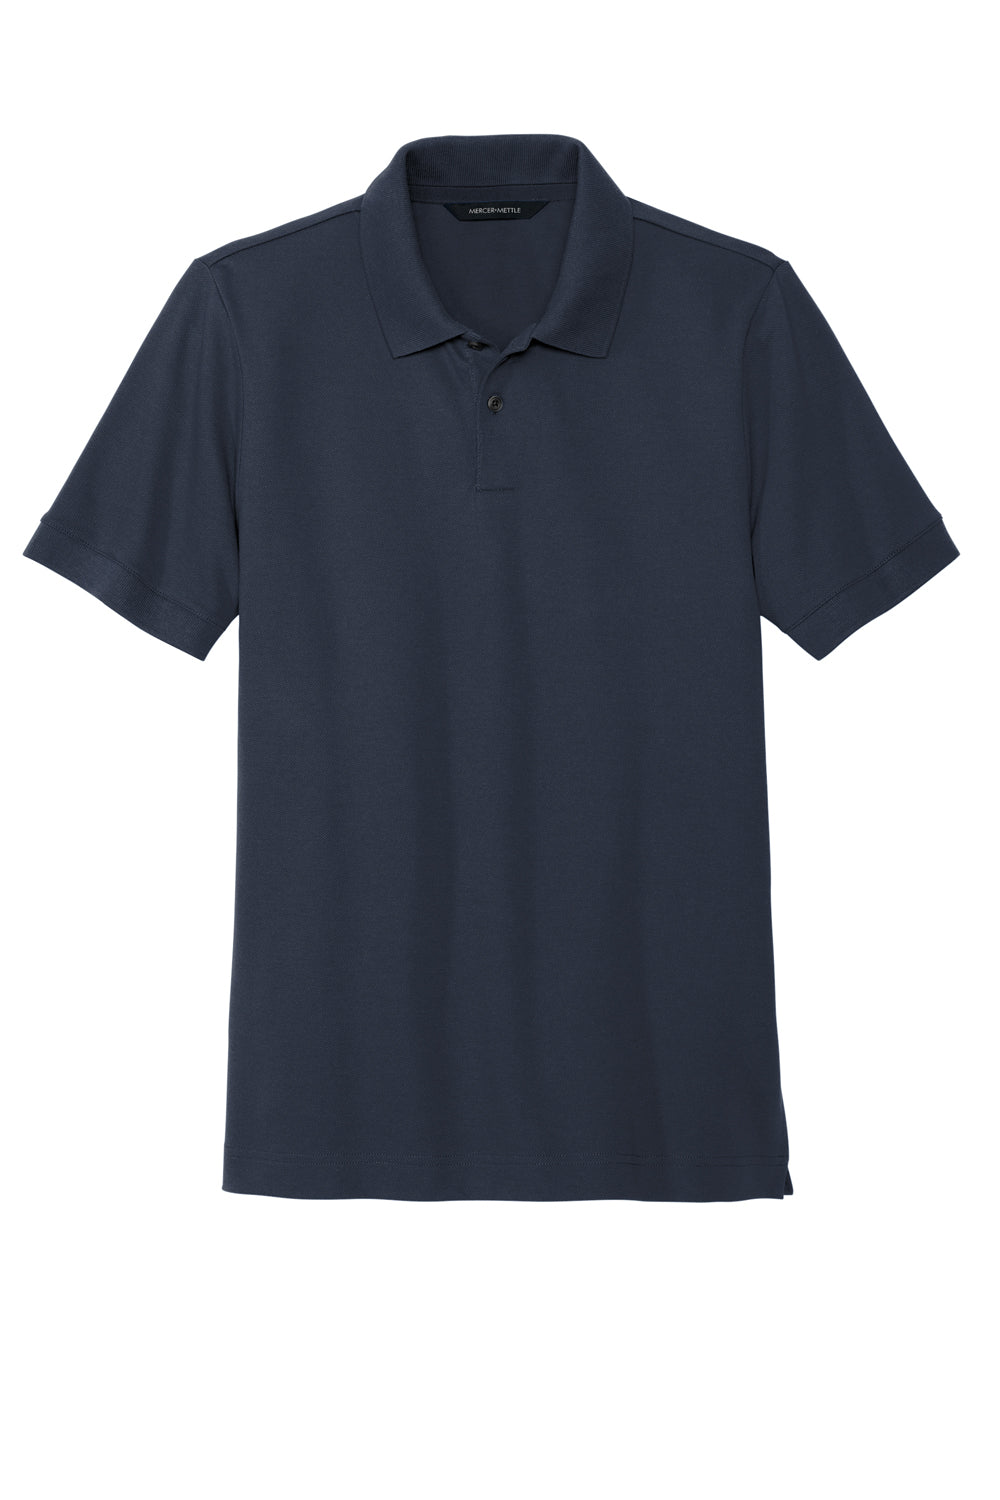 Mercer+Mettle MM1000 Stretch Pique Short Sleeve Polo Shirt Night Navy Blue Flat Front